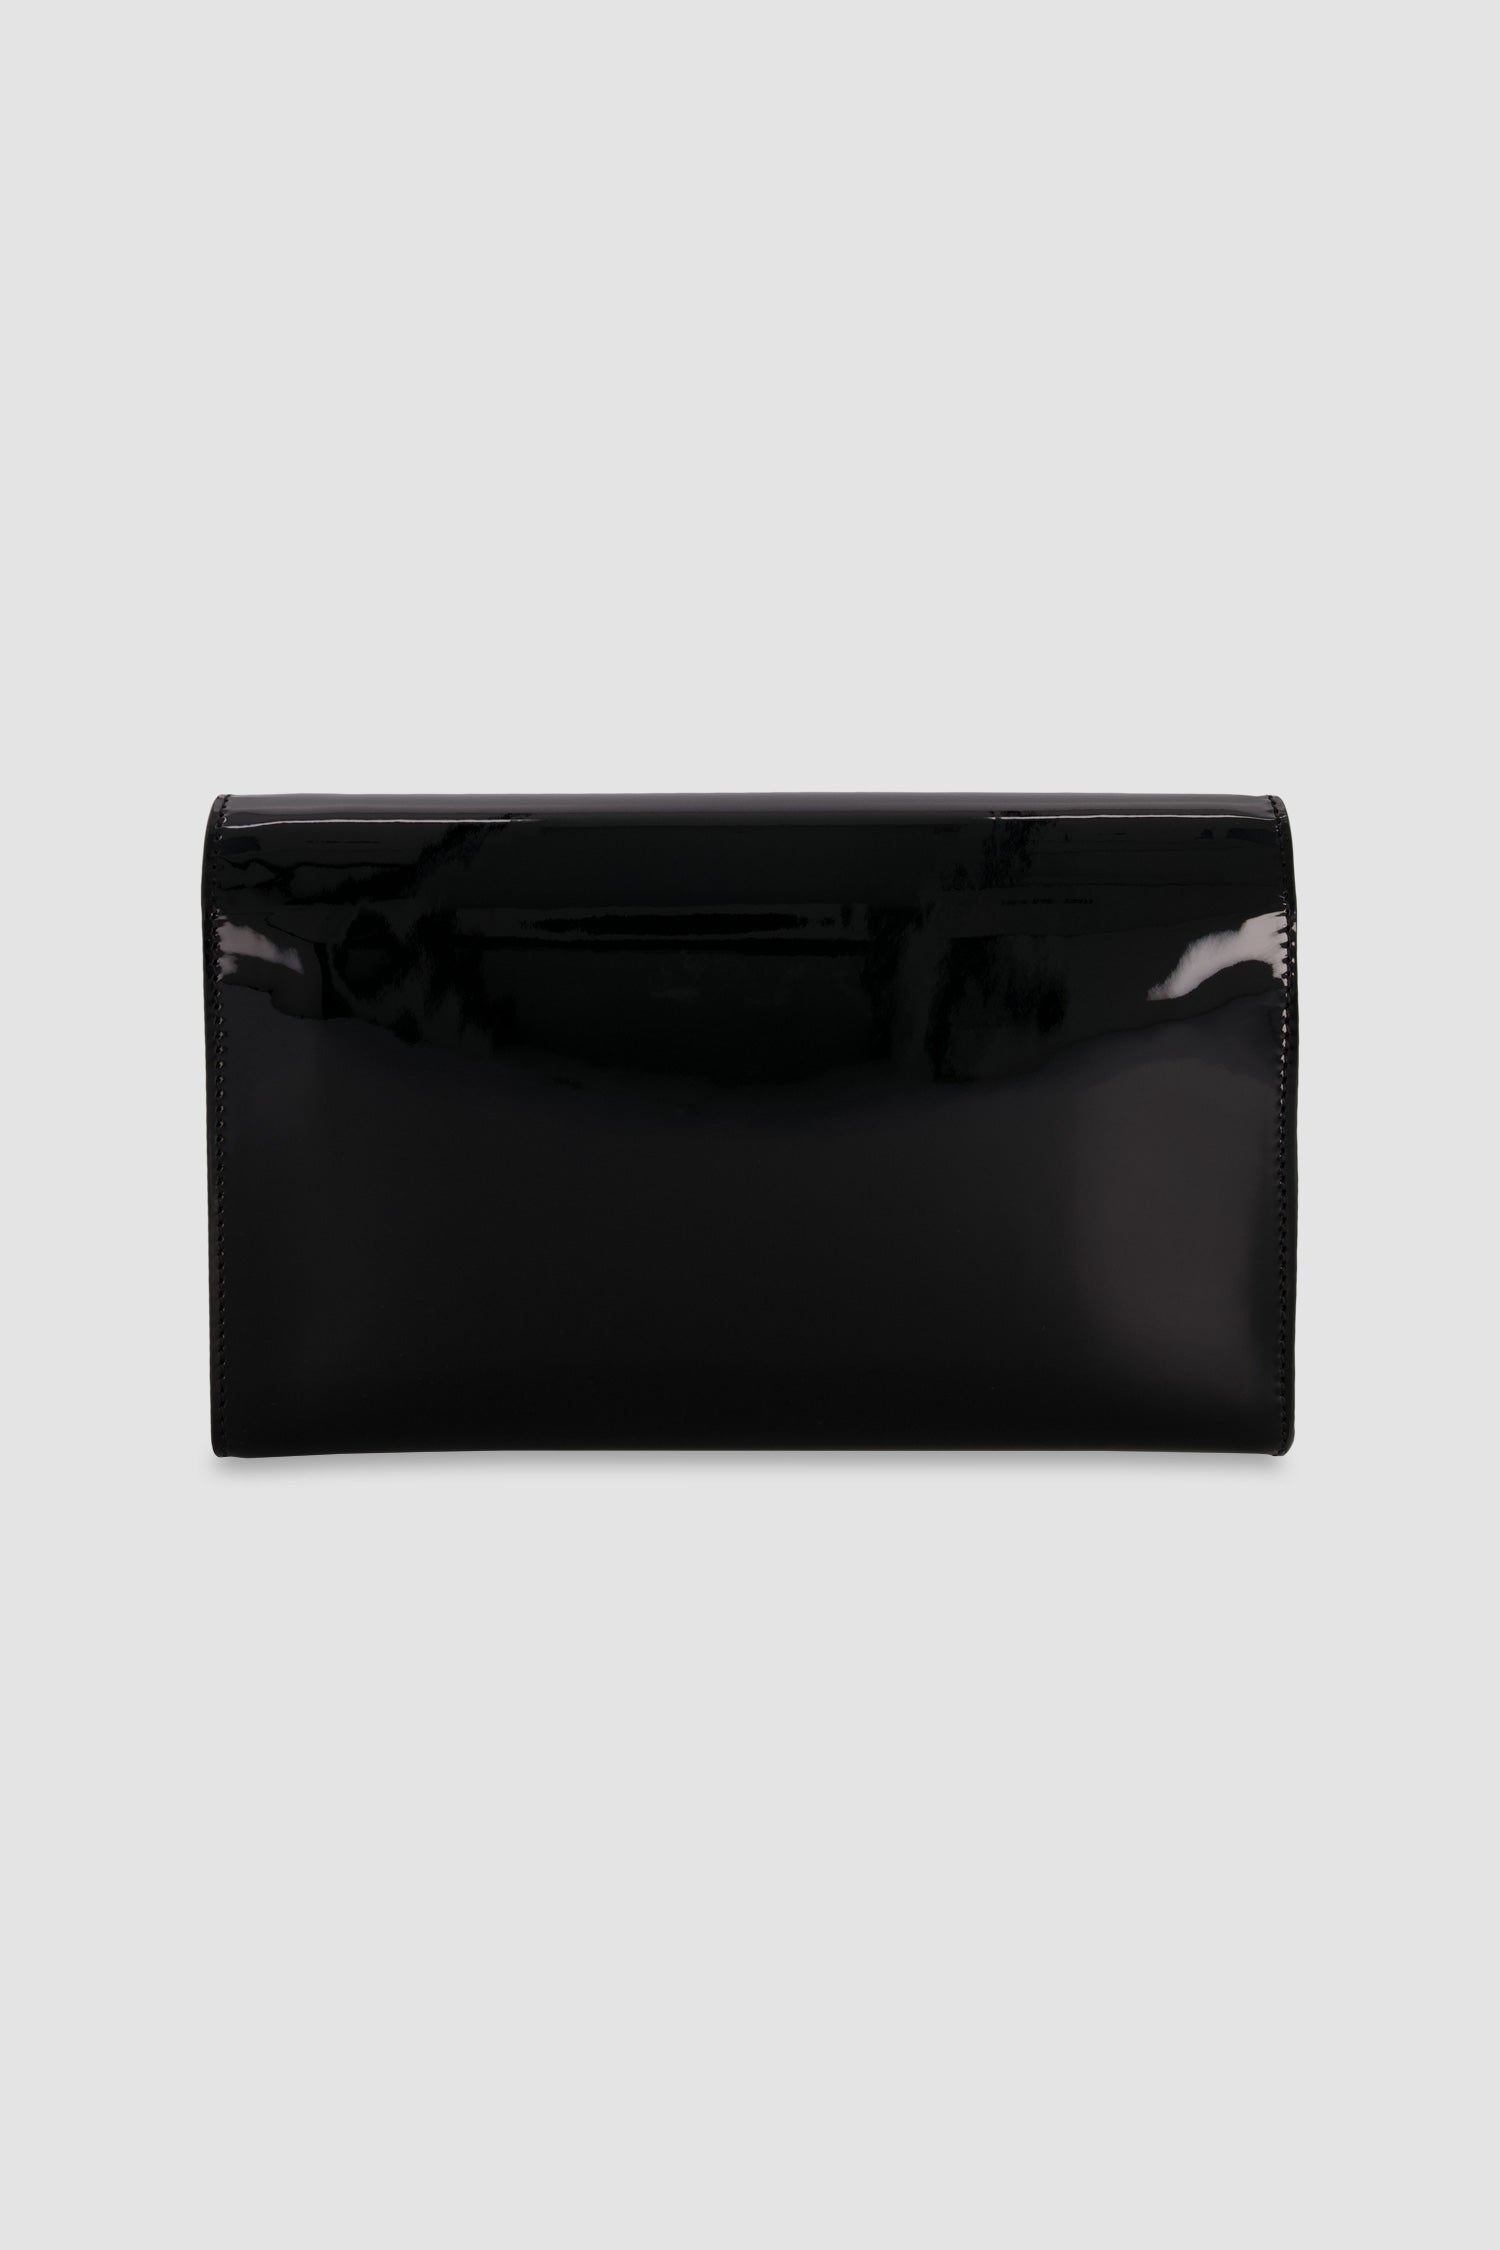 Philipp Plein Black Leather Patent Shoulder Bag